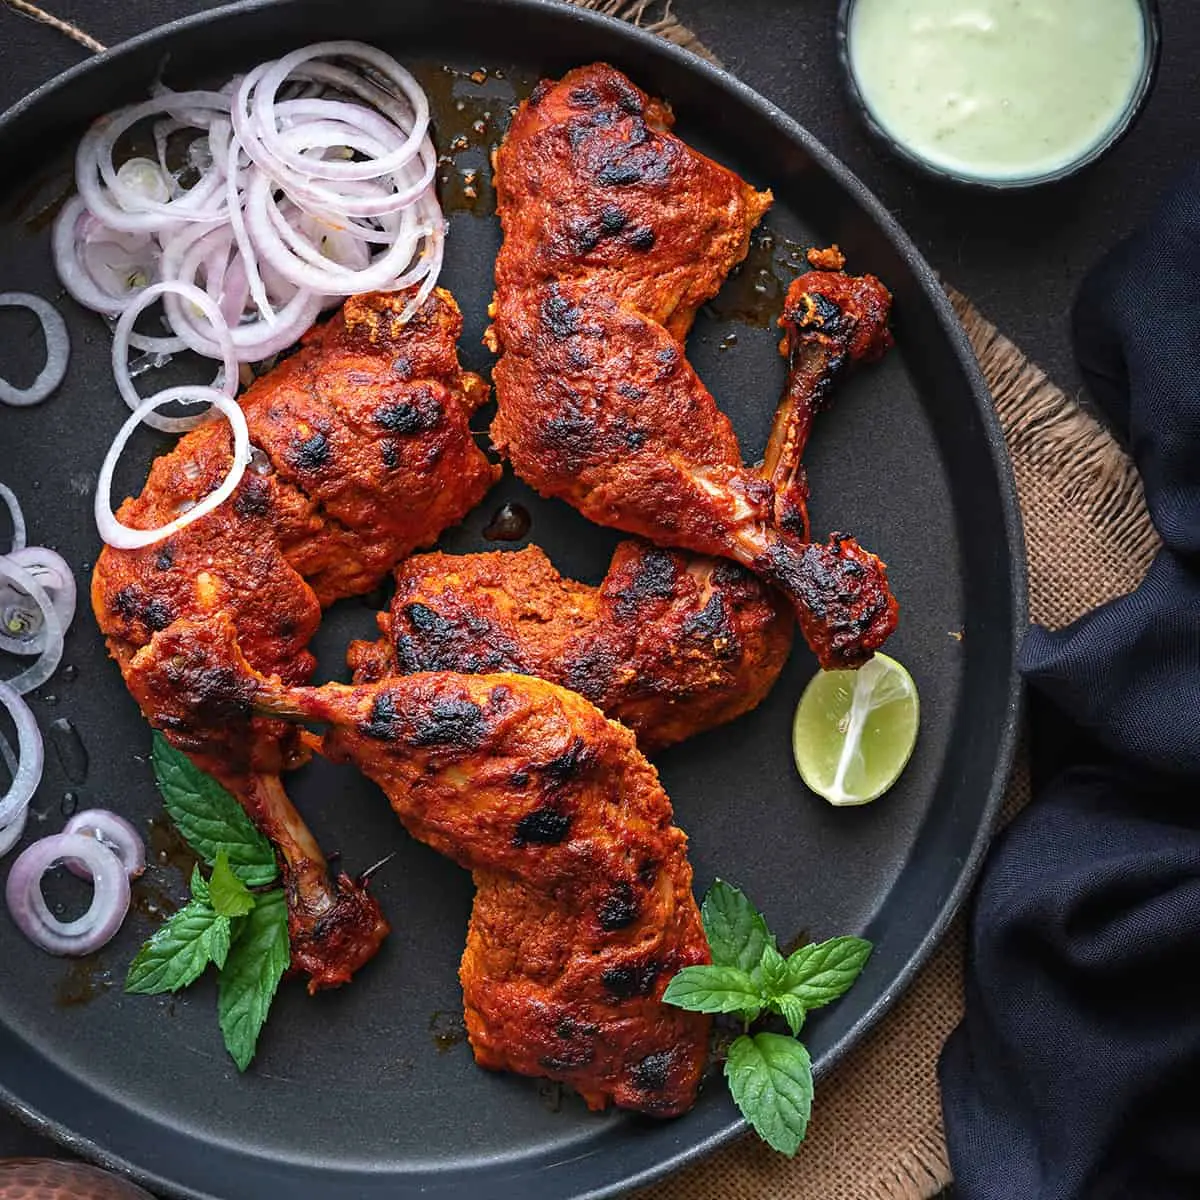 A Vibrant Display Of Tandoori Chicken With Accompaniments Like Biryani Rice, Lemon Wedges, And Fresh Mint Chutney, Celebrating Indian Cuisine.